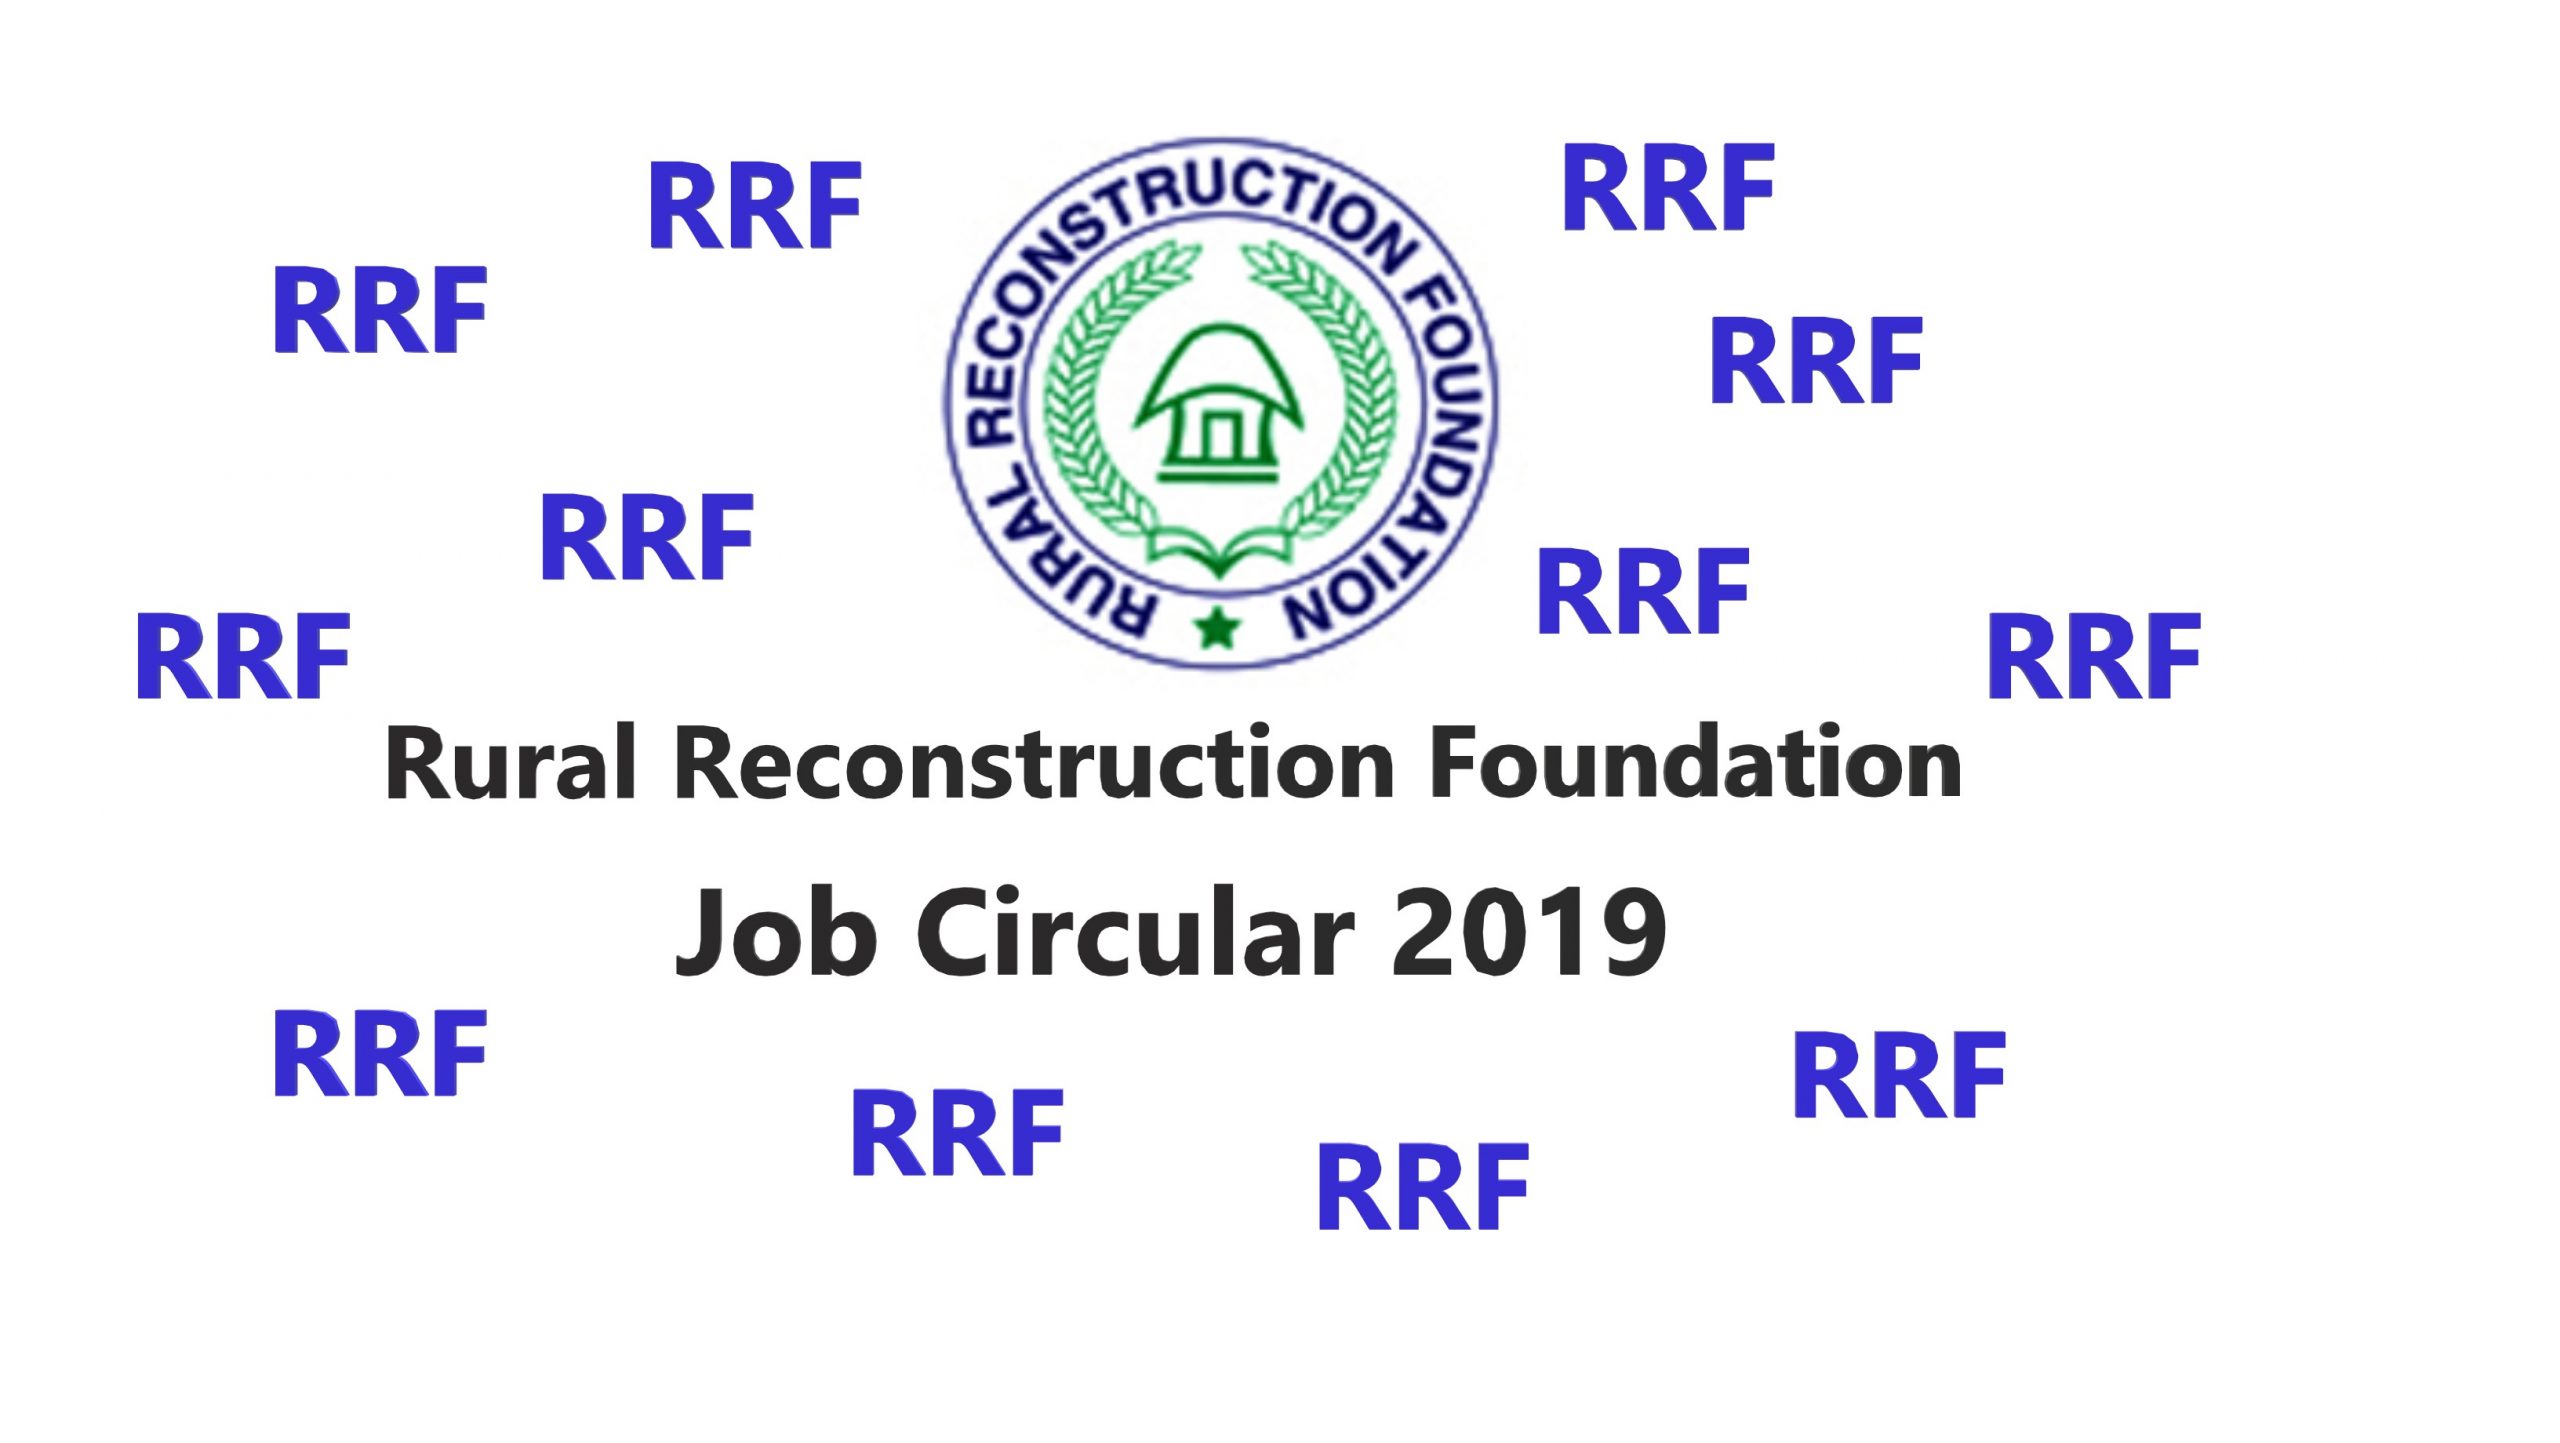 Rural Reconstruction Foundation (RRF) Job Circular 2019